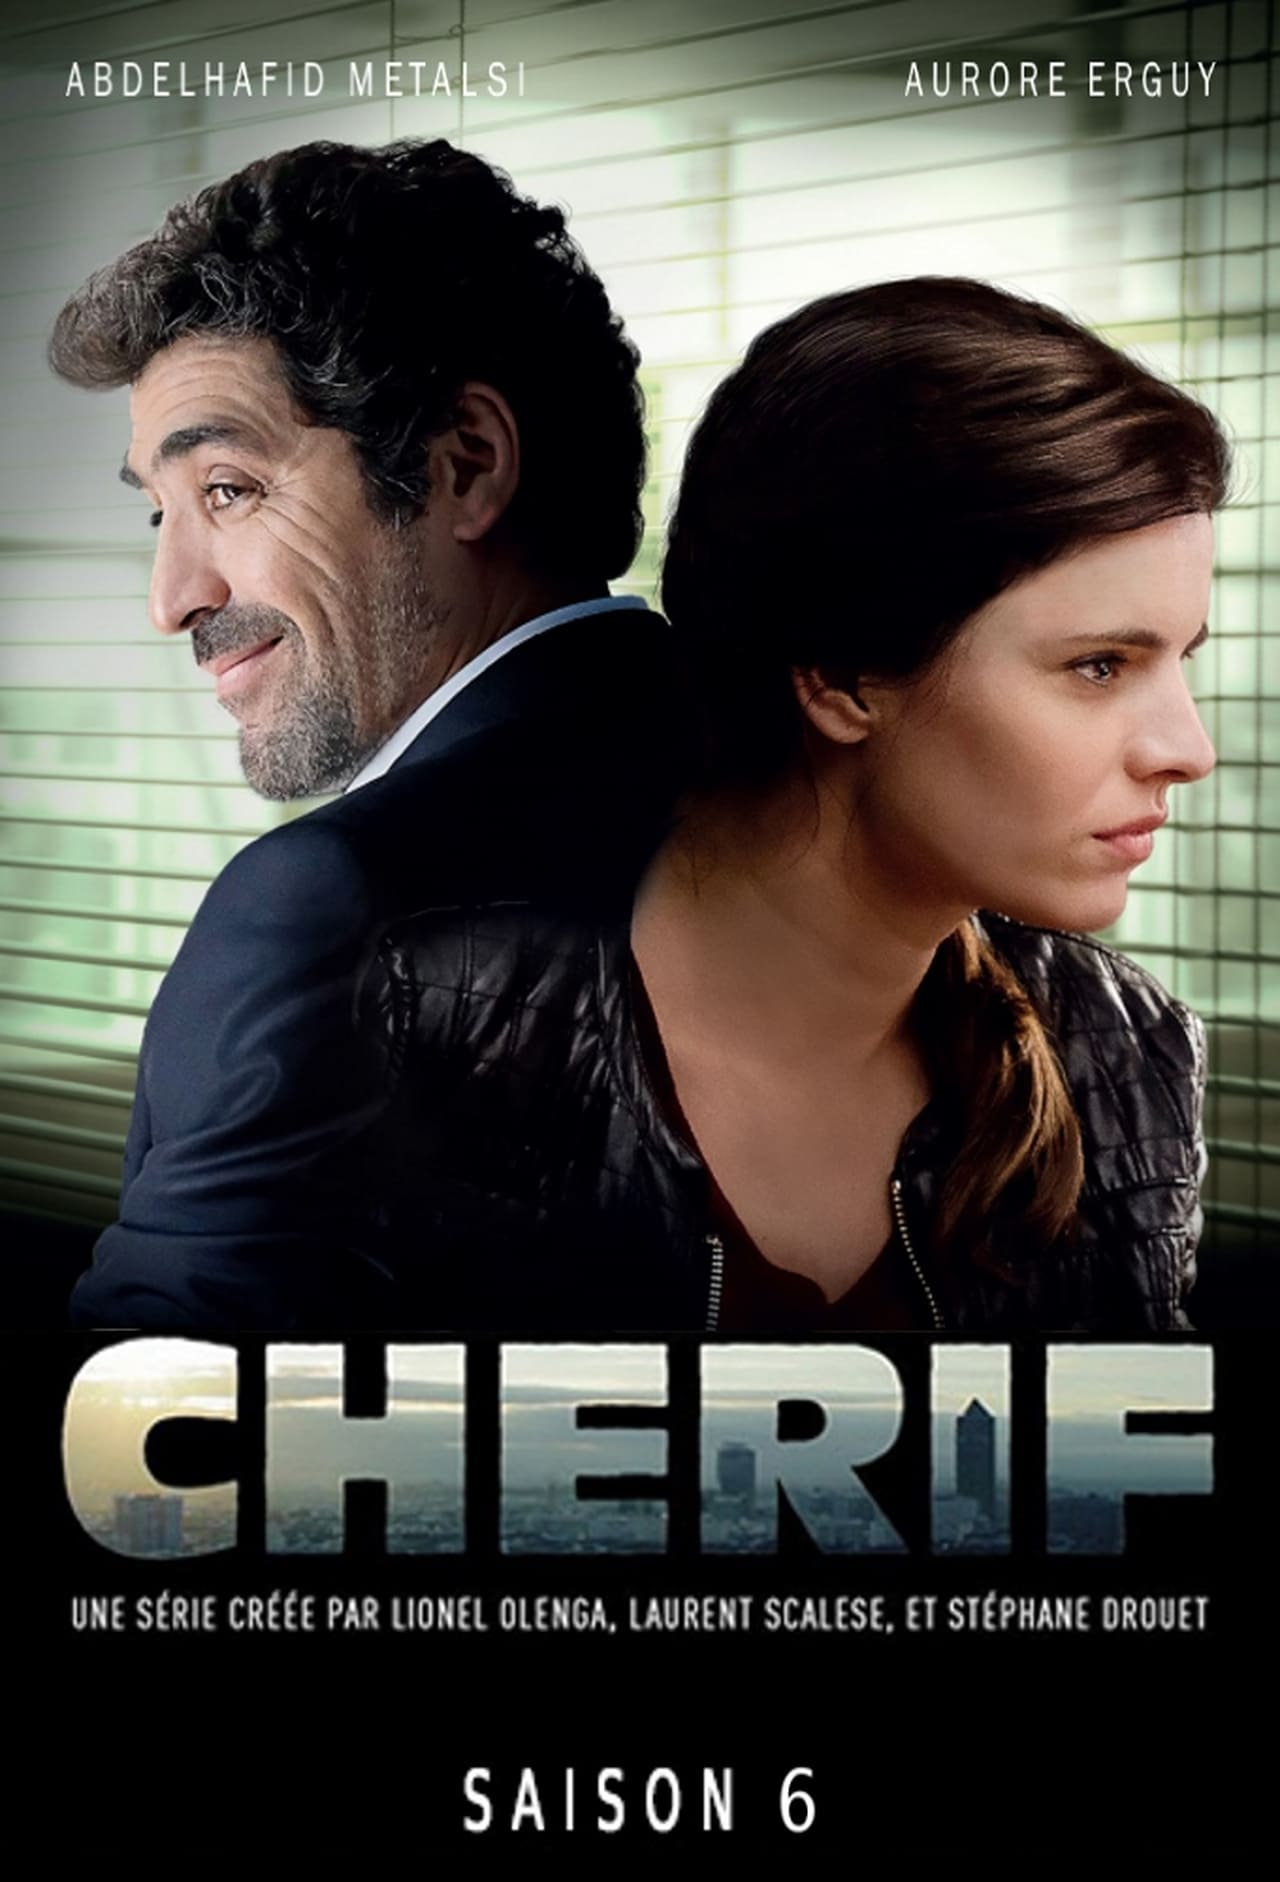 Cherif Season 6